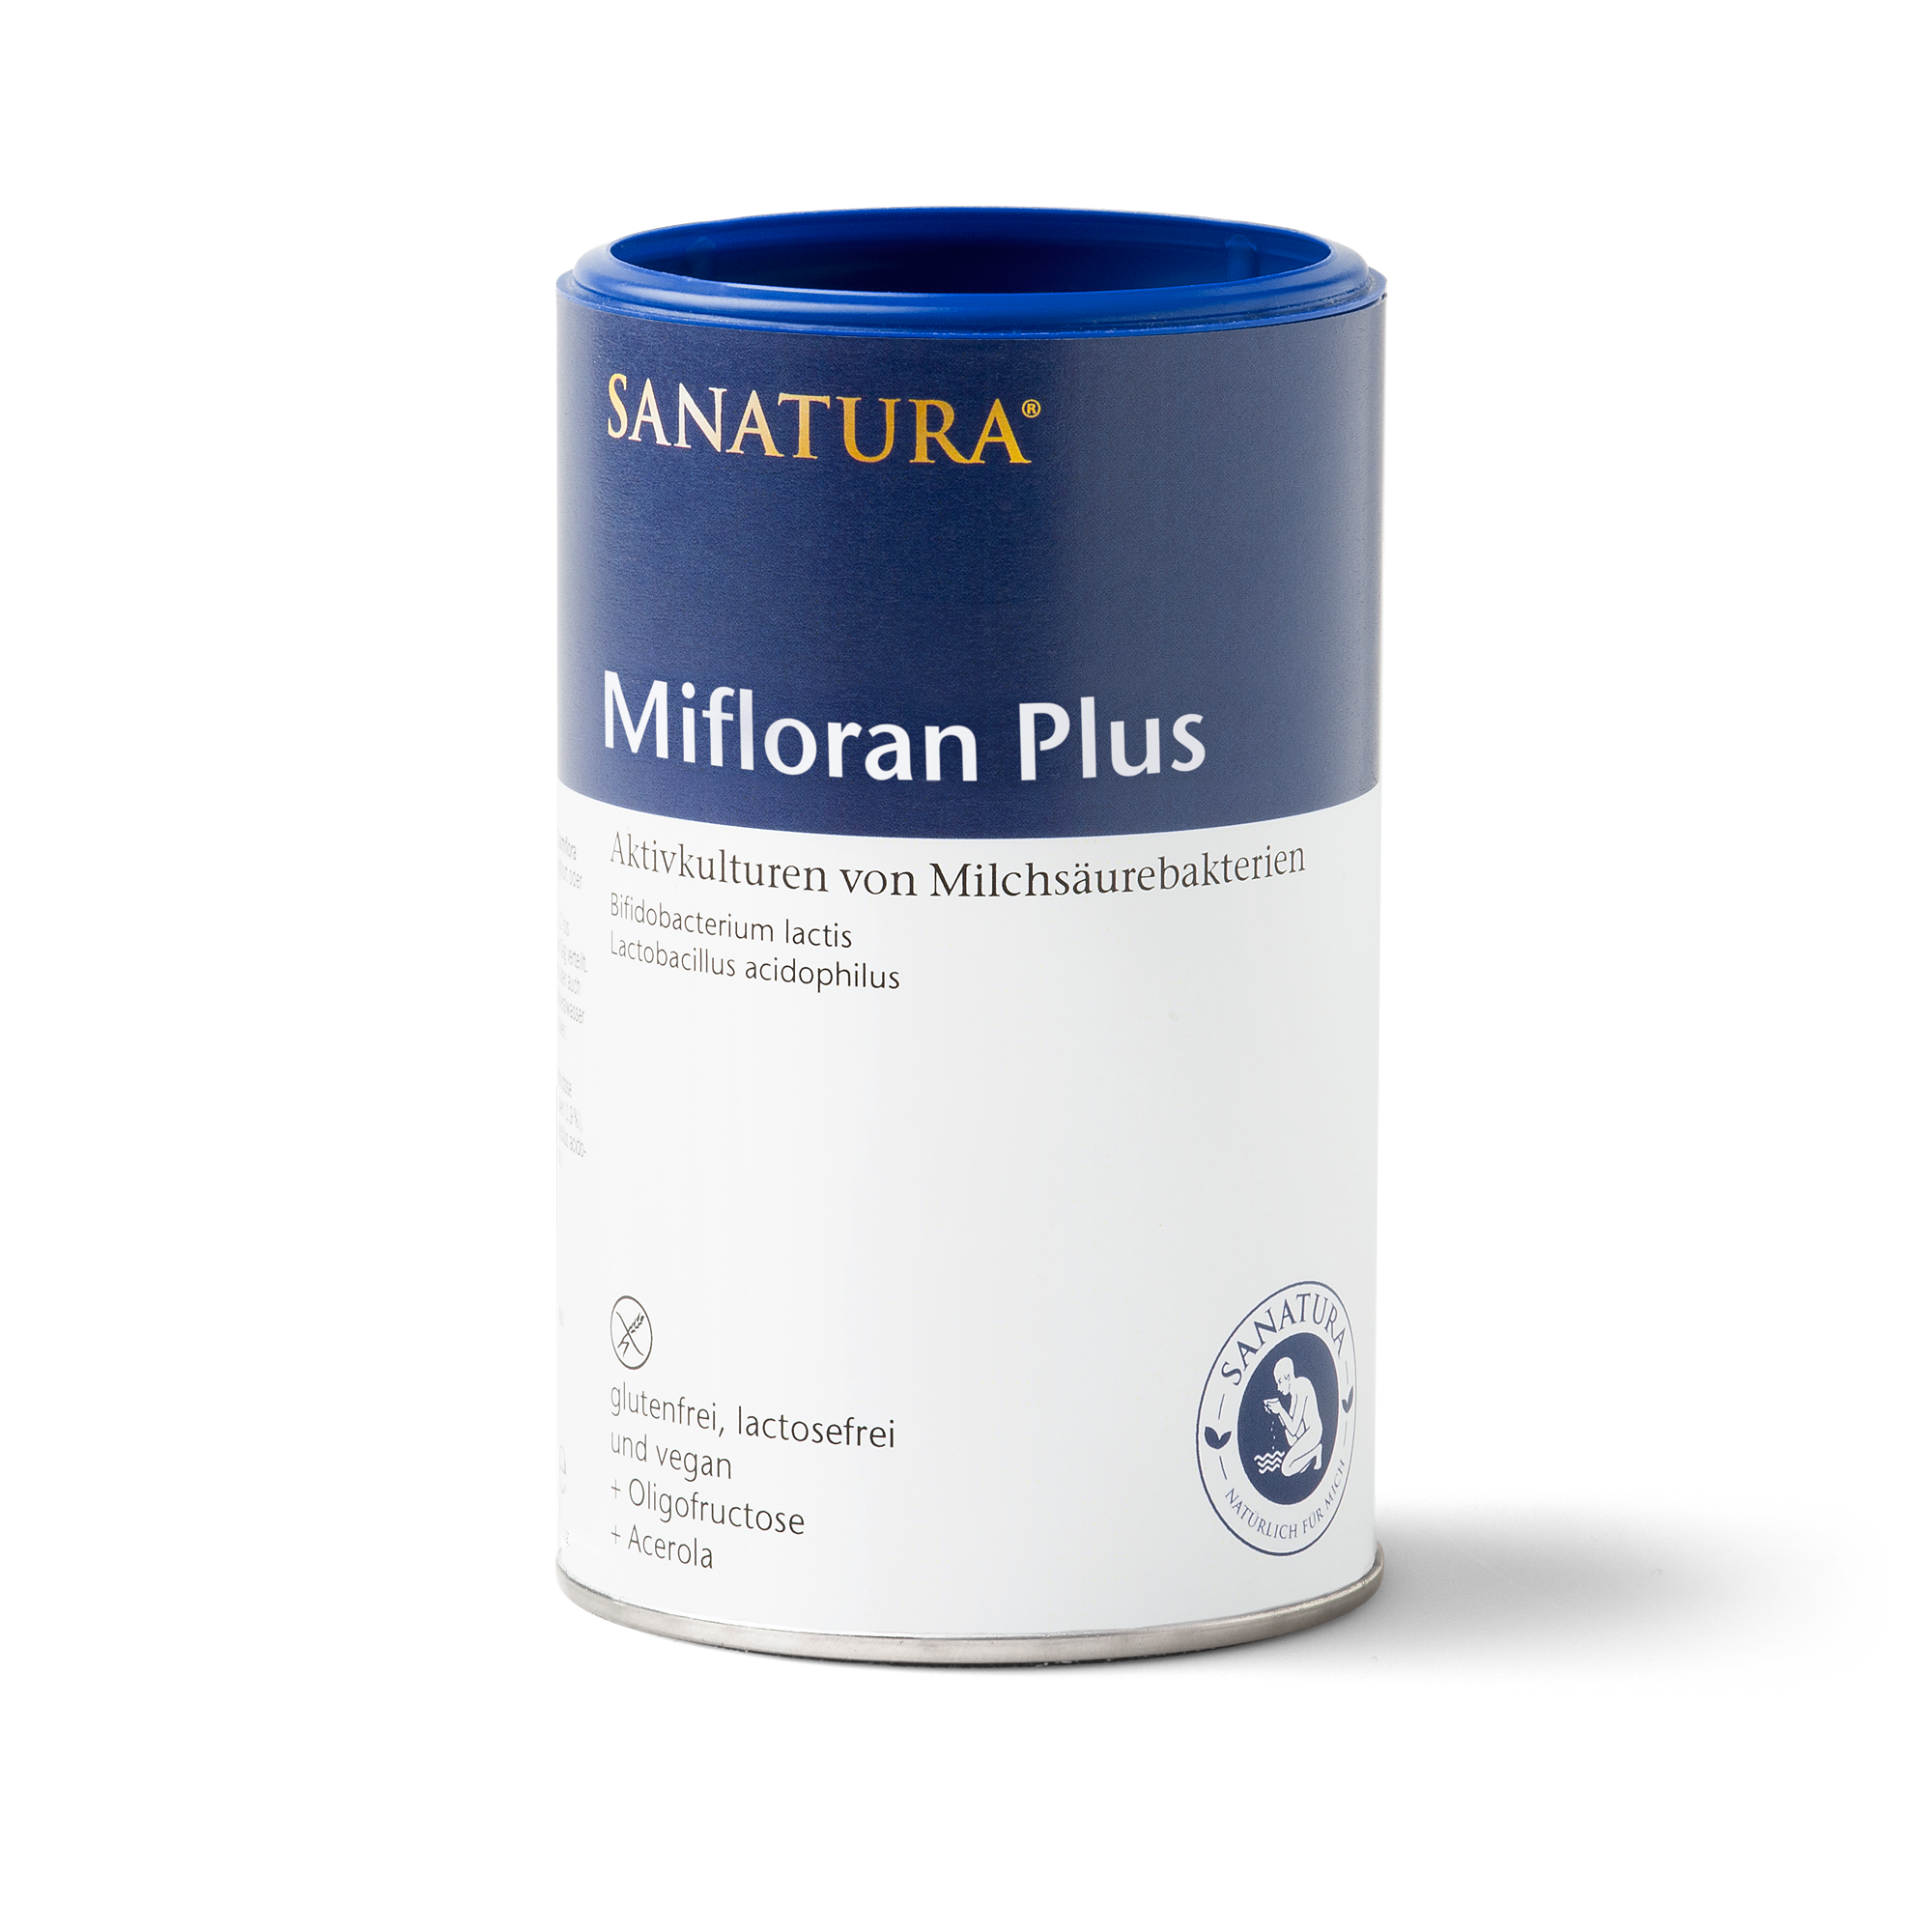 Sanatura Mifloran Plus | 200g | Unterstützt Darmgesundheit & Immunsystem mit Probiotika